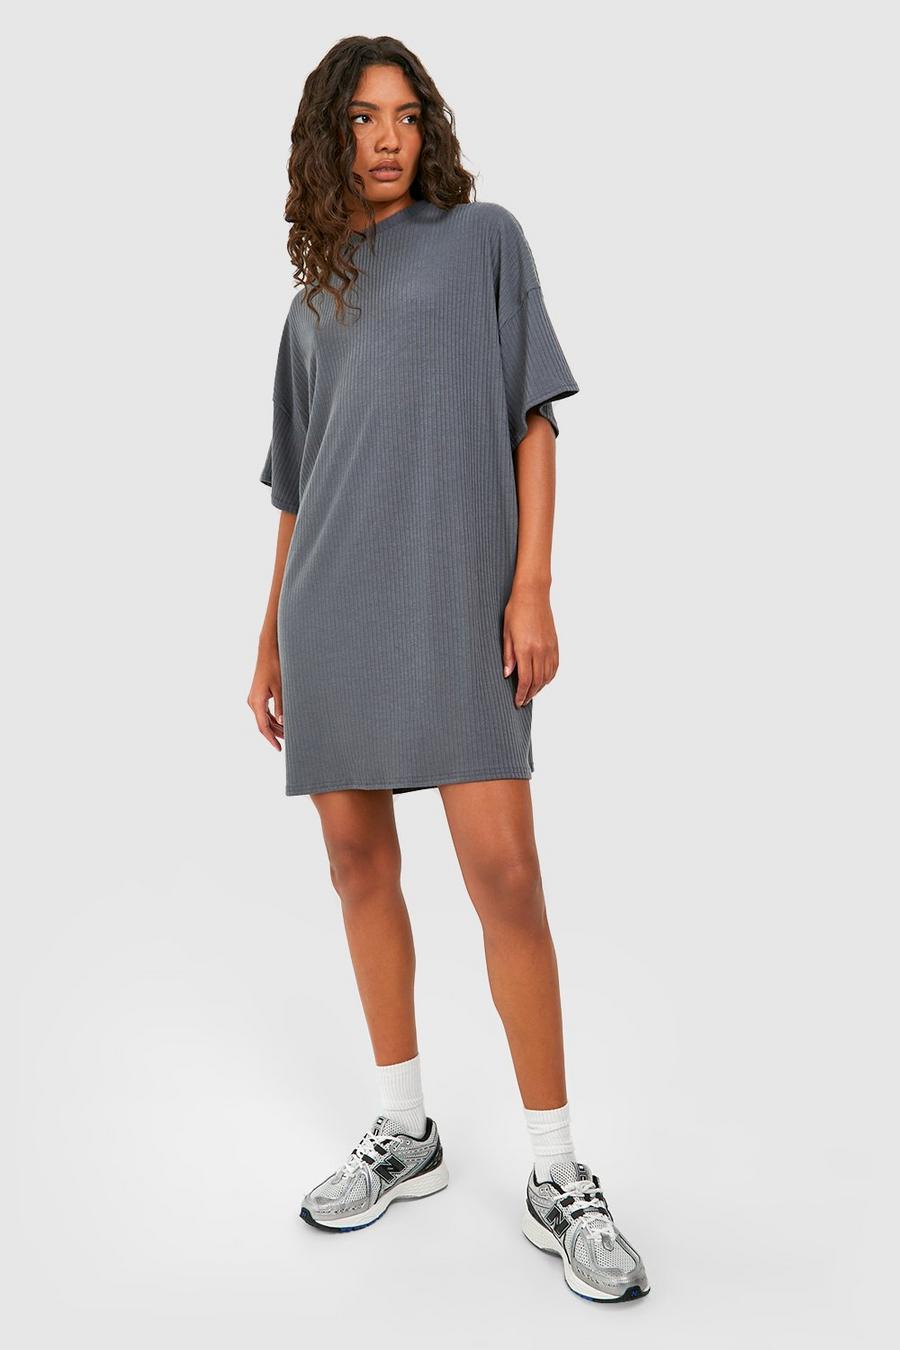 Tall langärmliges geripptes weiches T-Shirt-Kleid, Charcoal